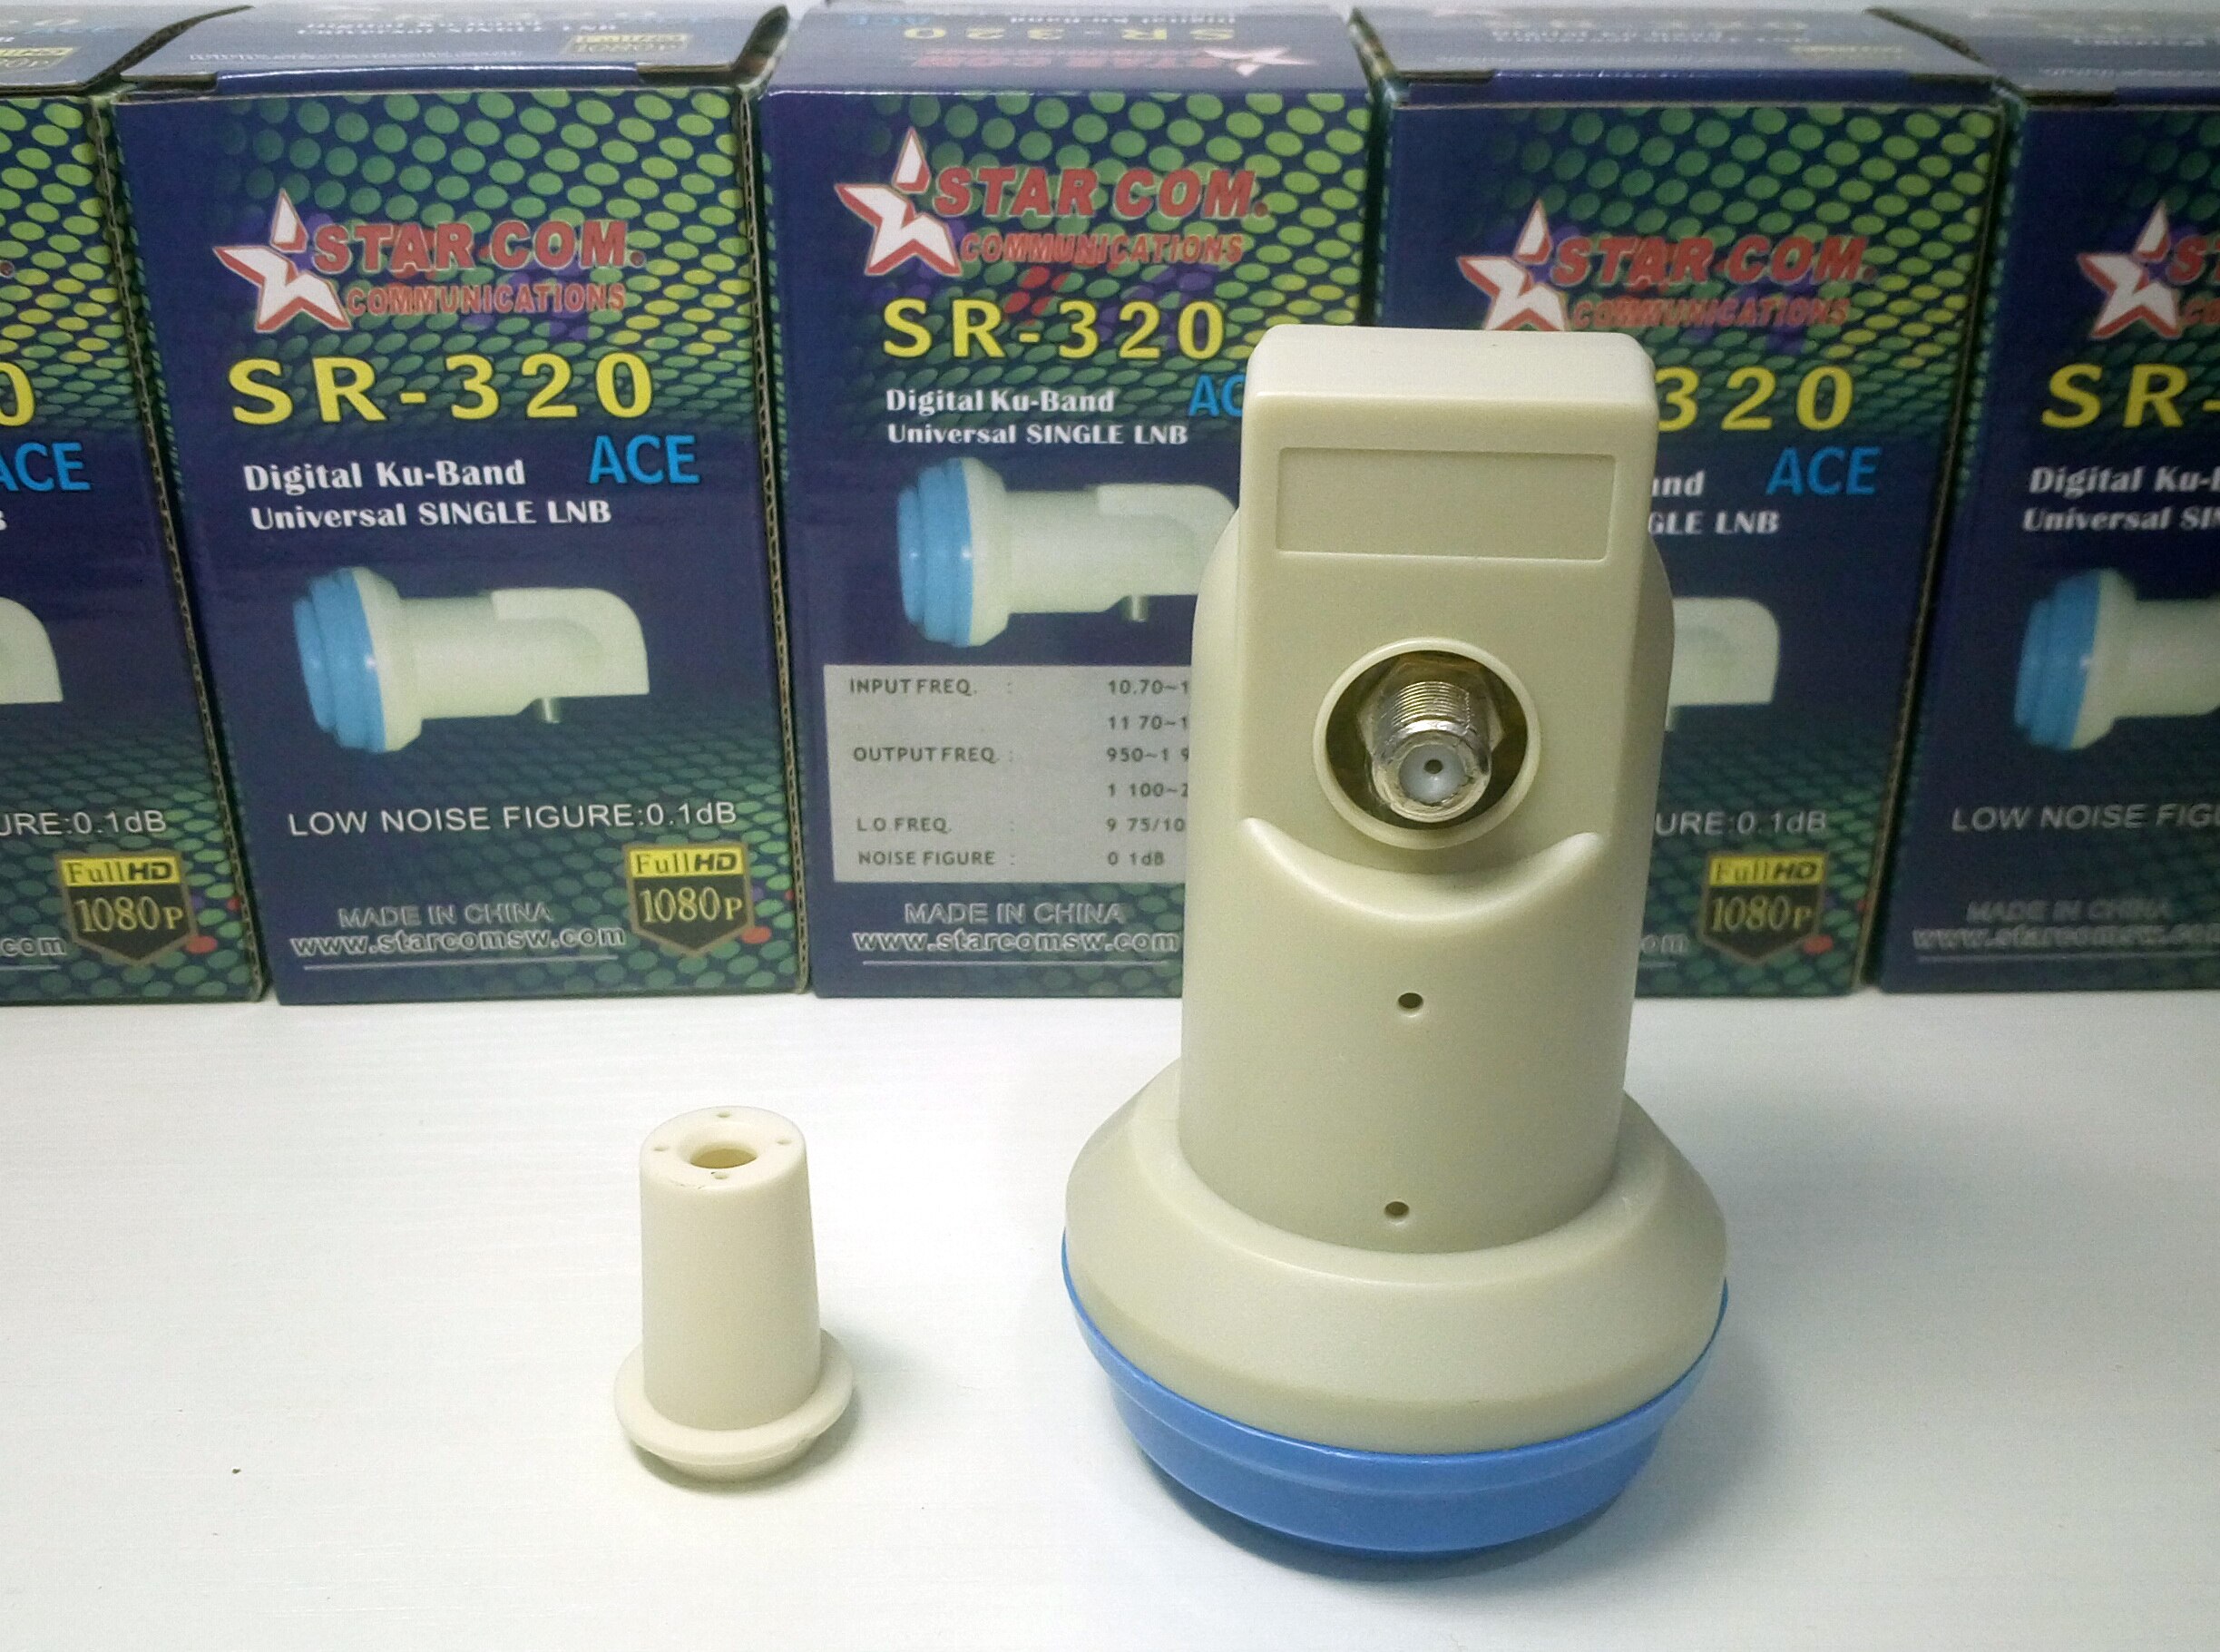 Star com sr -320 bedste signal digital hd universal ku band single lnb vandtæt høj gain lav støj lnb